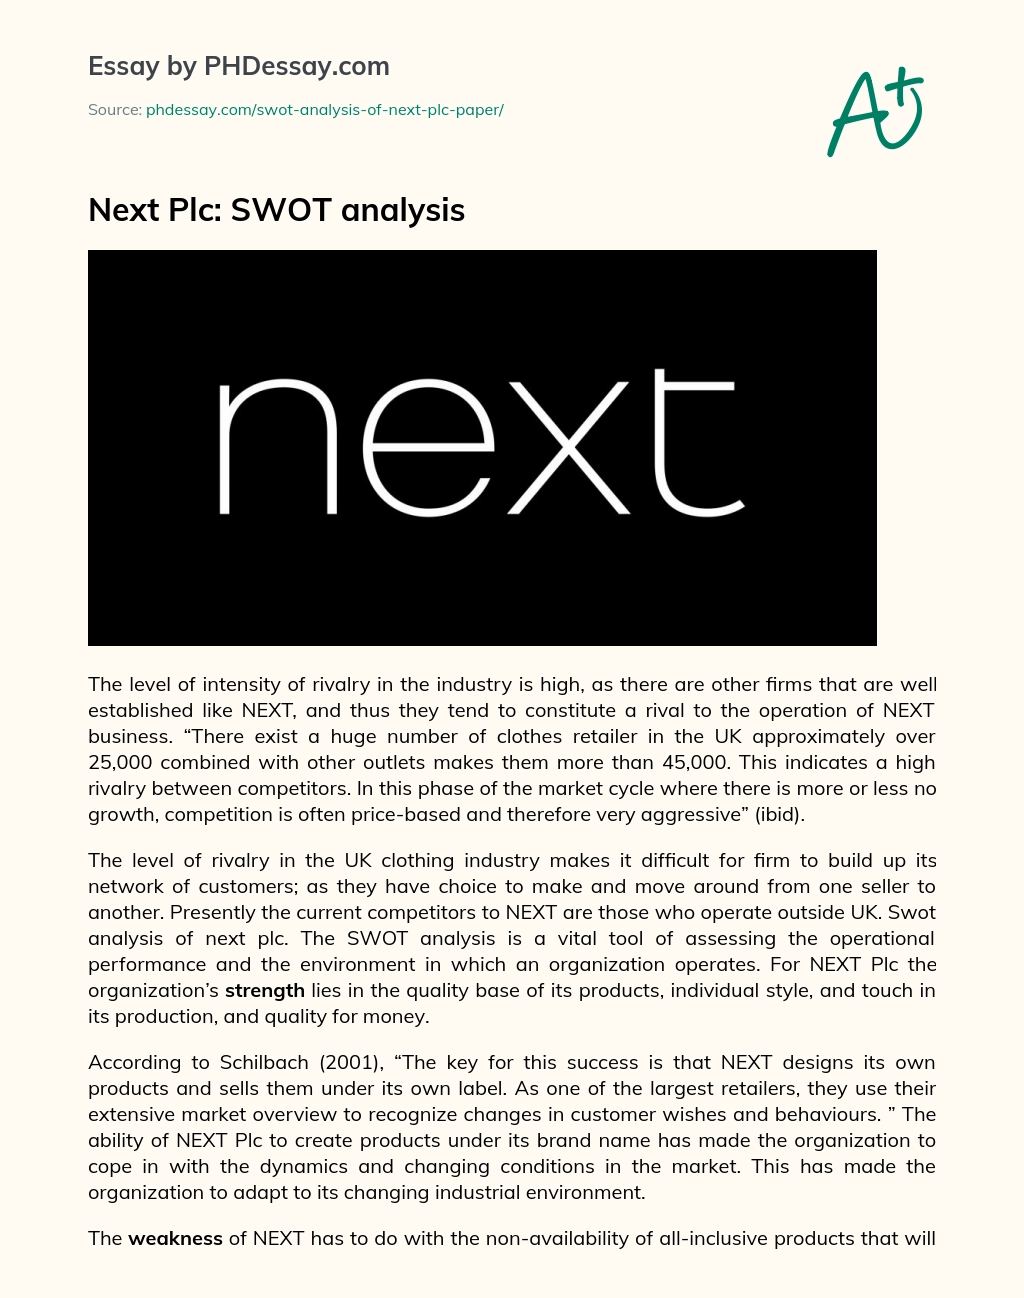 Next Plc: SWOT analysis essay